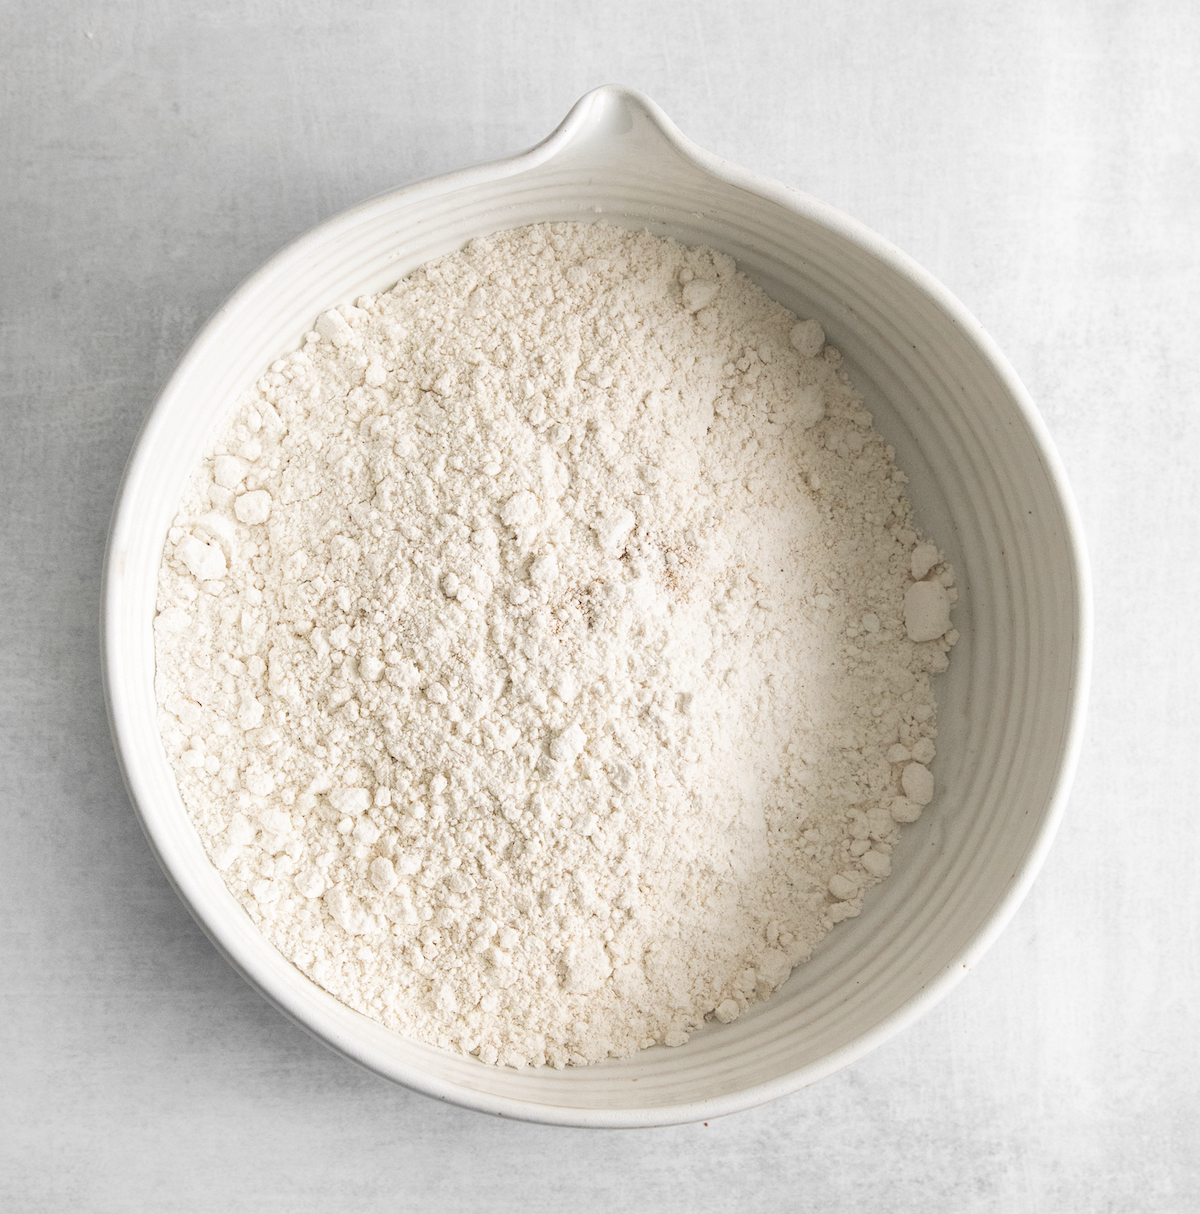 flour, almond flour, baking powder, pumpkin pie spice, and salt in a bowl